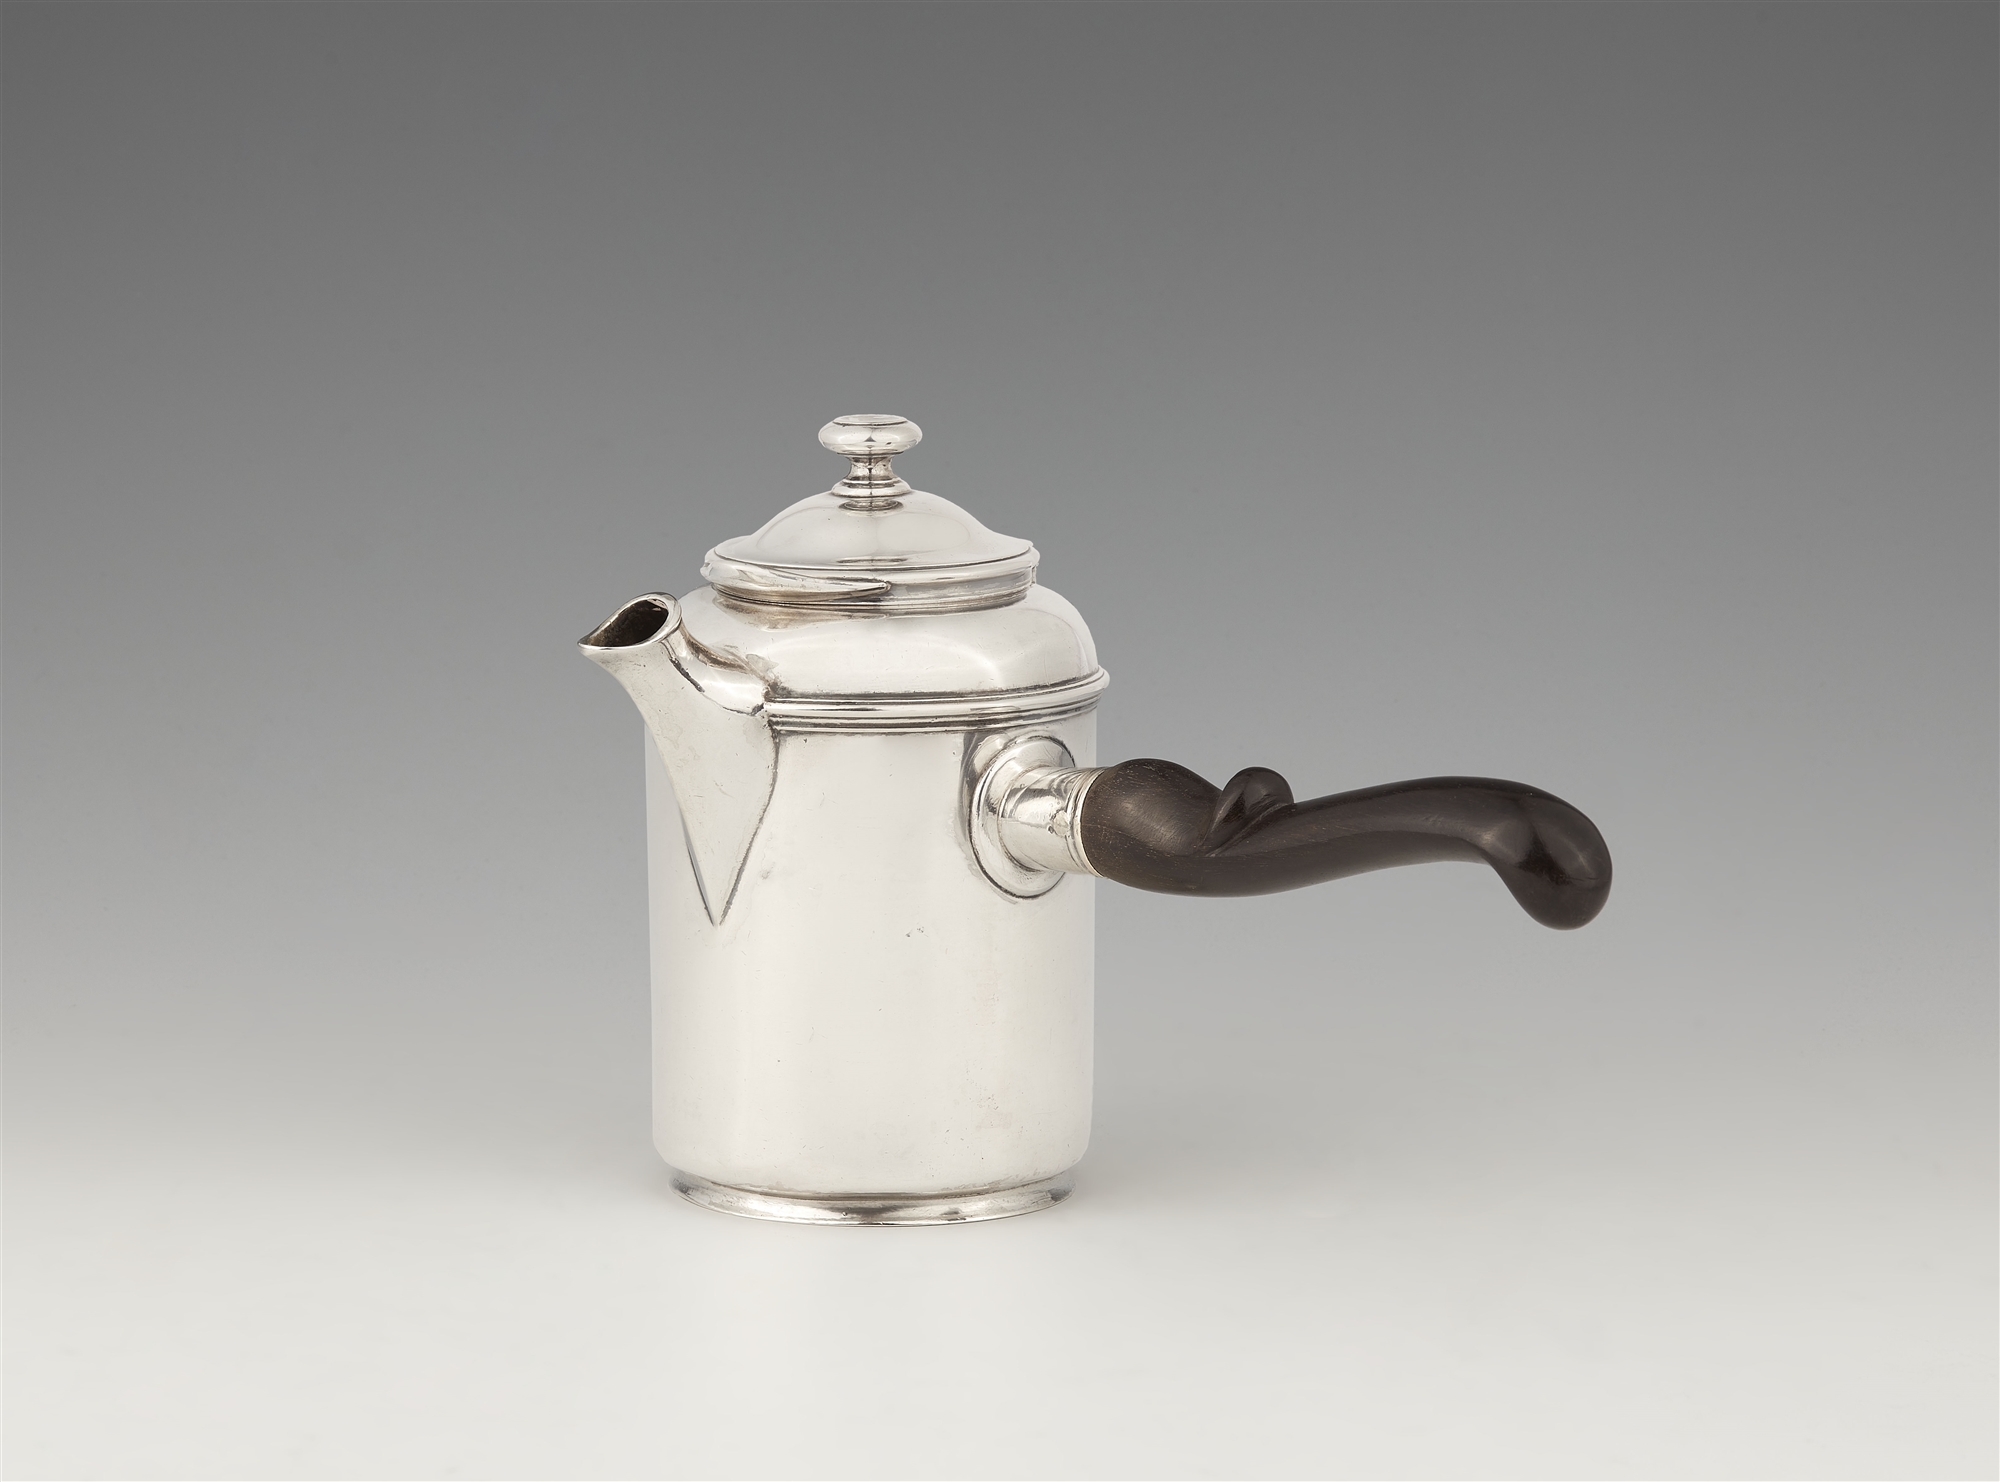 A Dresden silver hot milk jug from the Dresden court silver